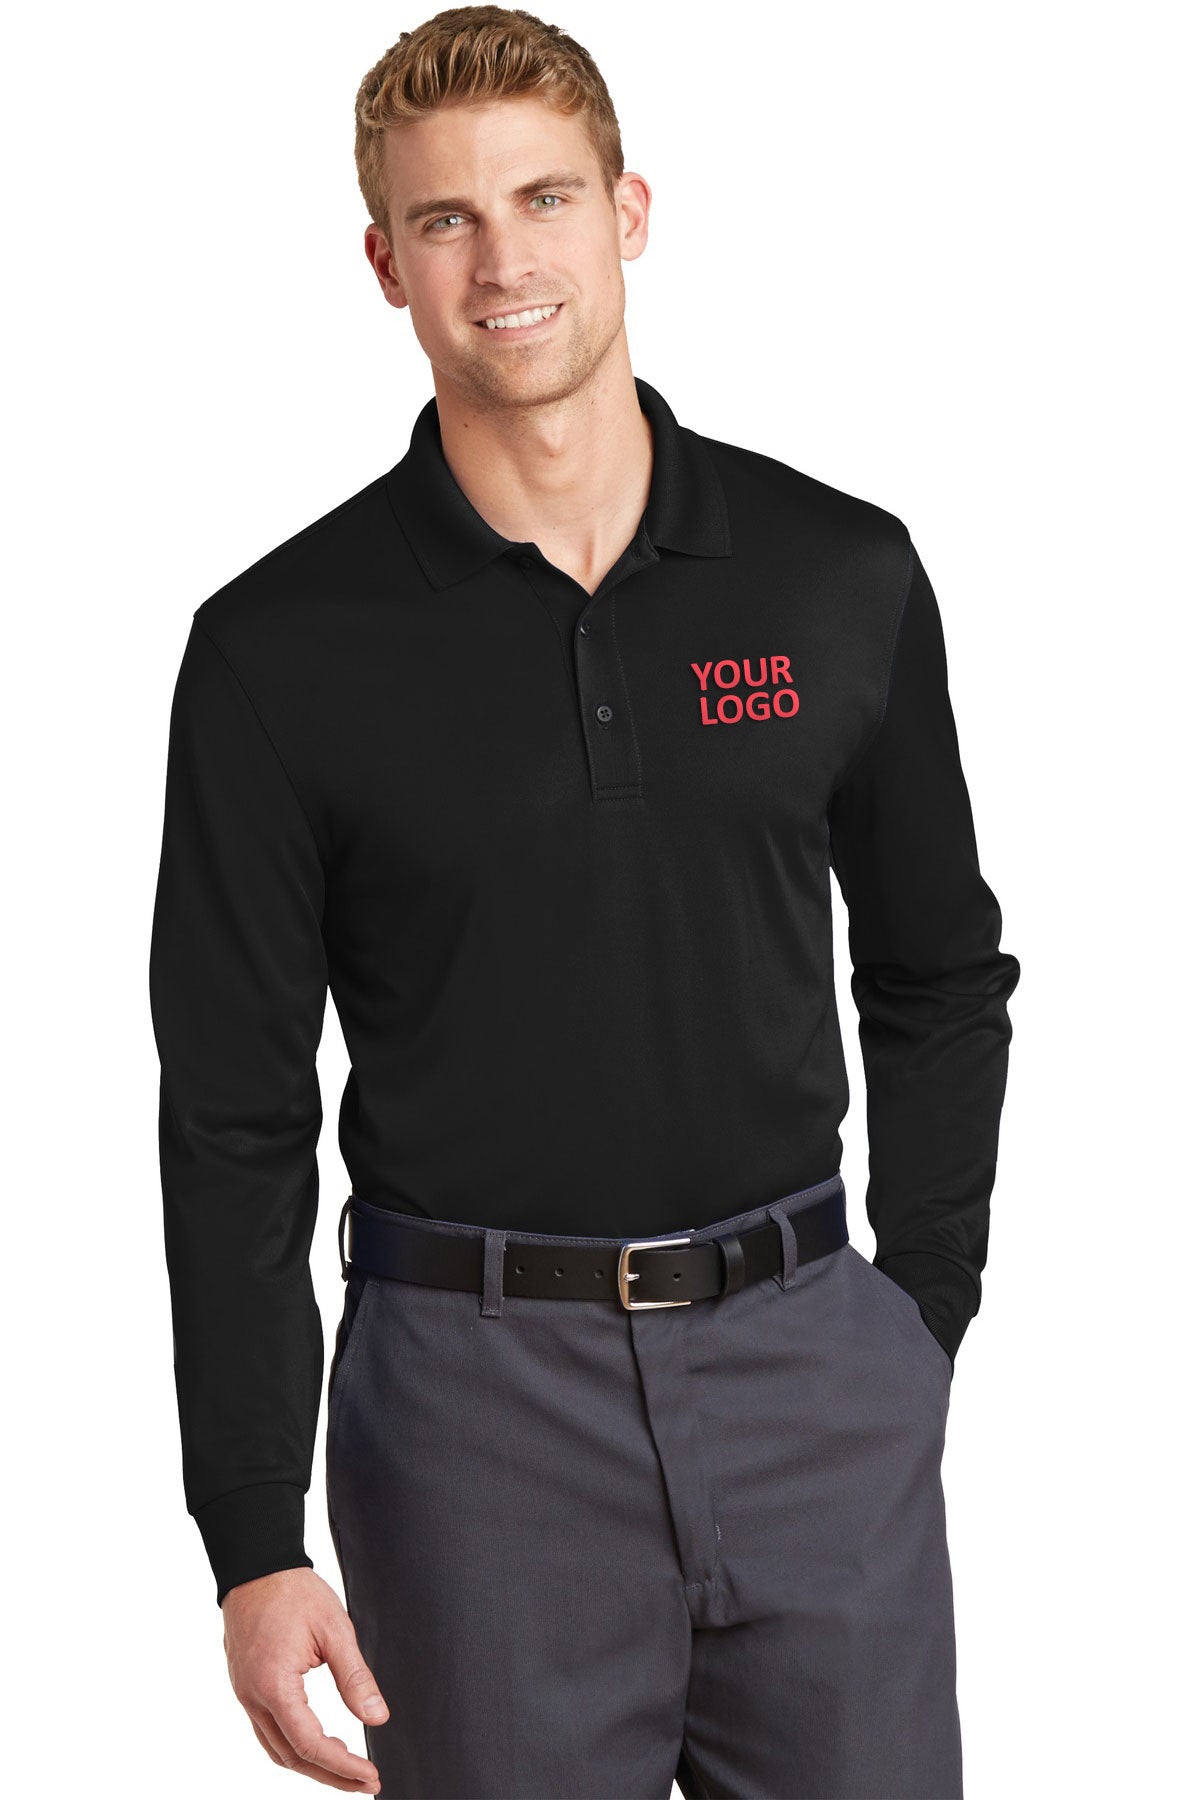 CornerStone Black CS412LS custom business polo shirts